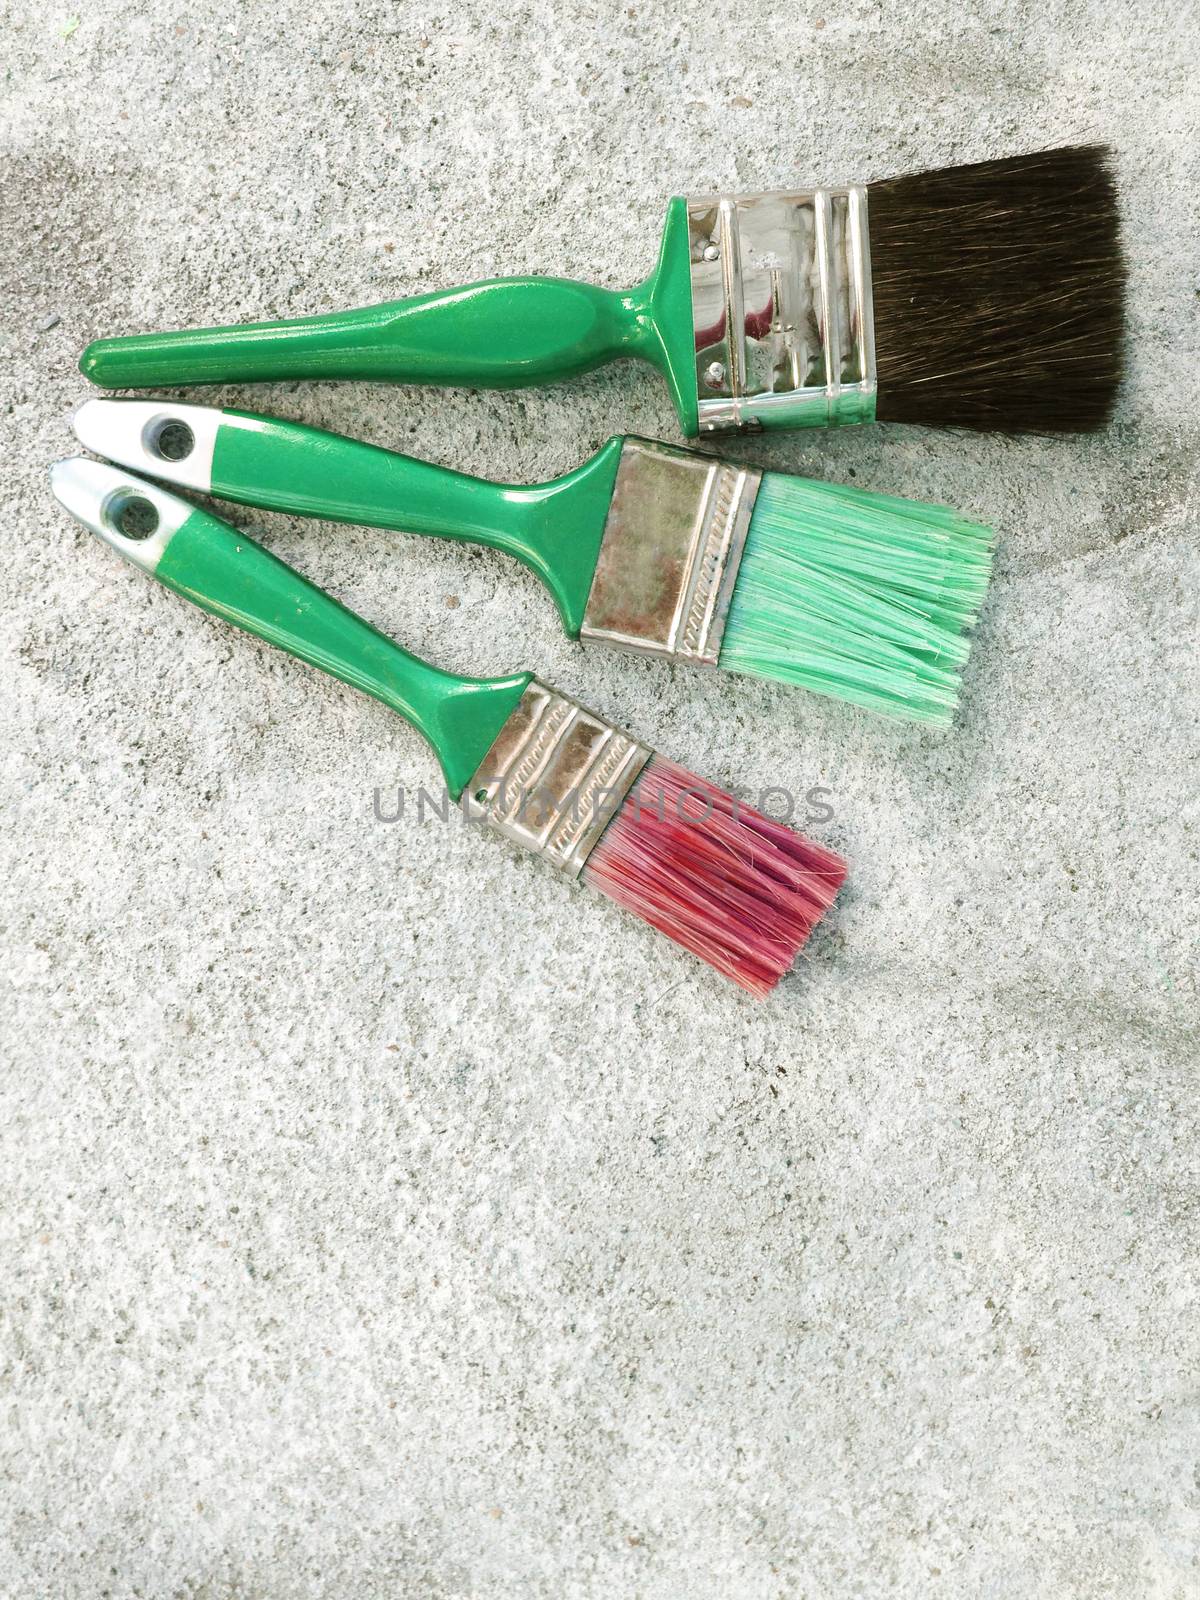 Paint brush on cement floor
 by Bowonpat